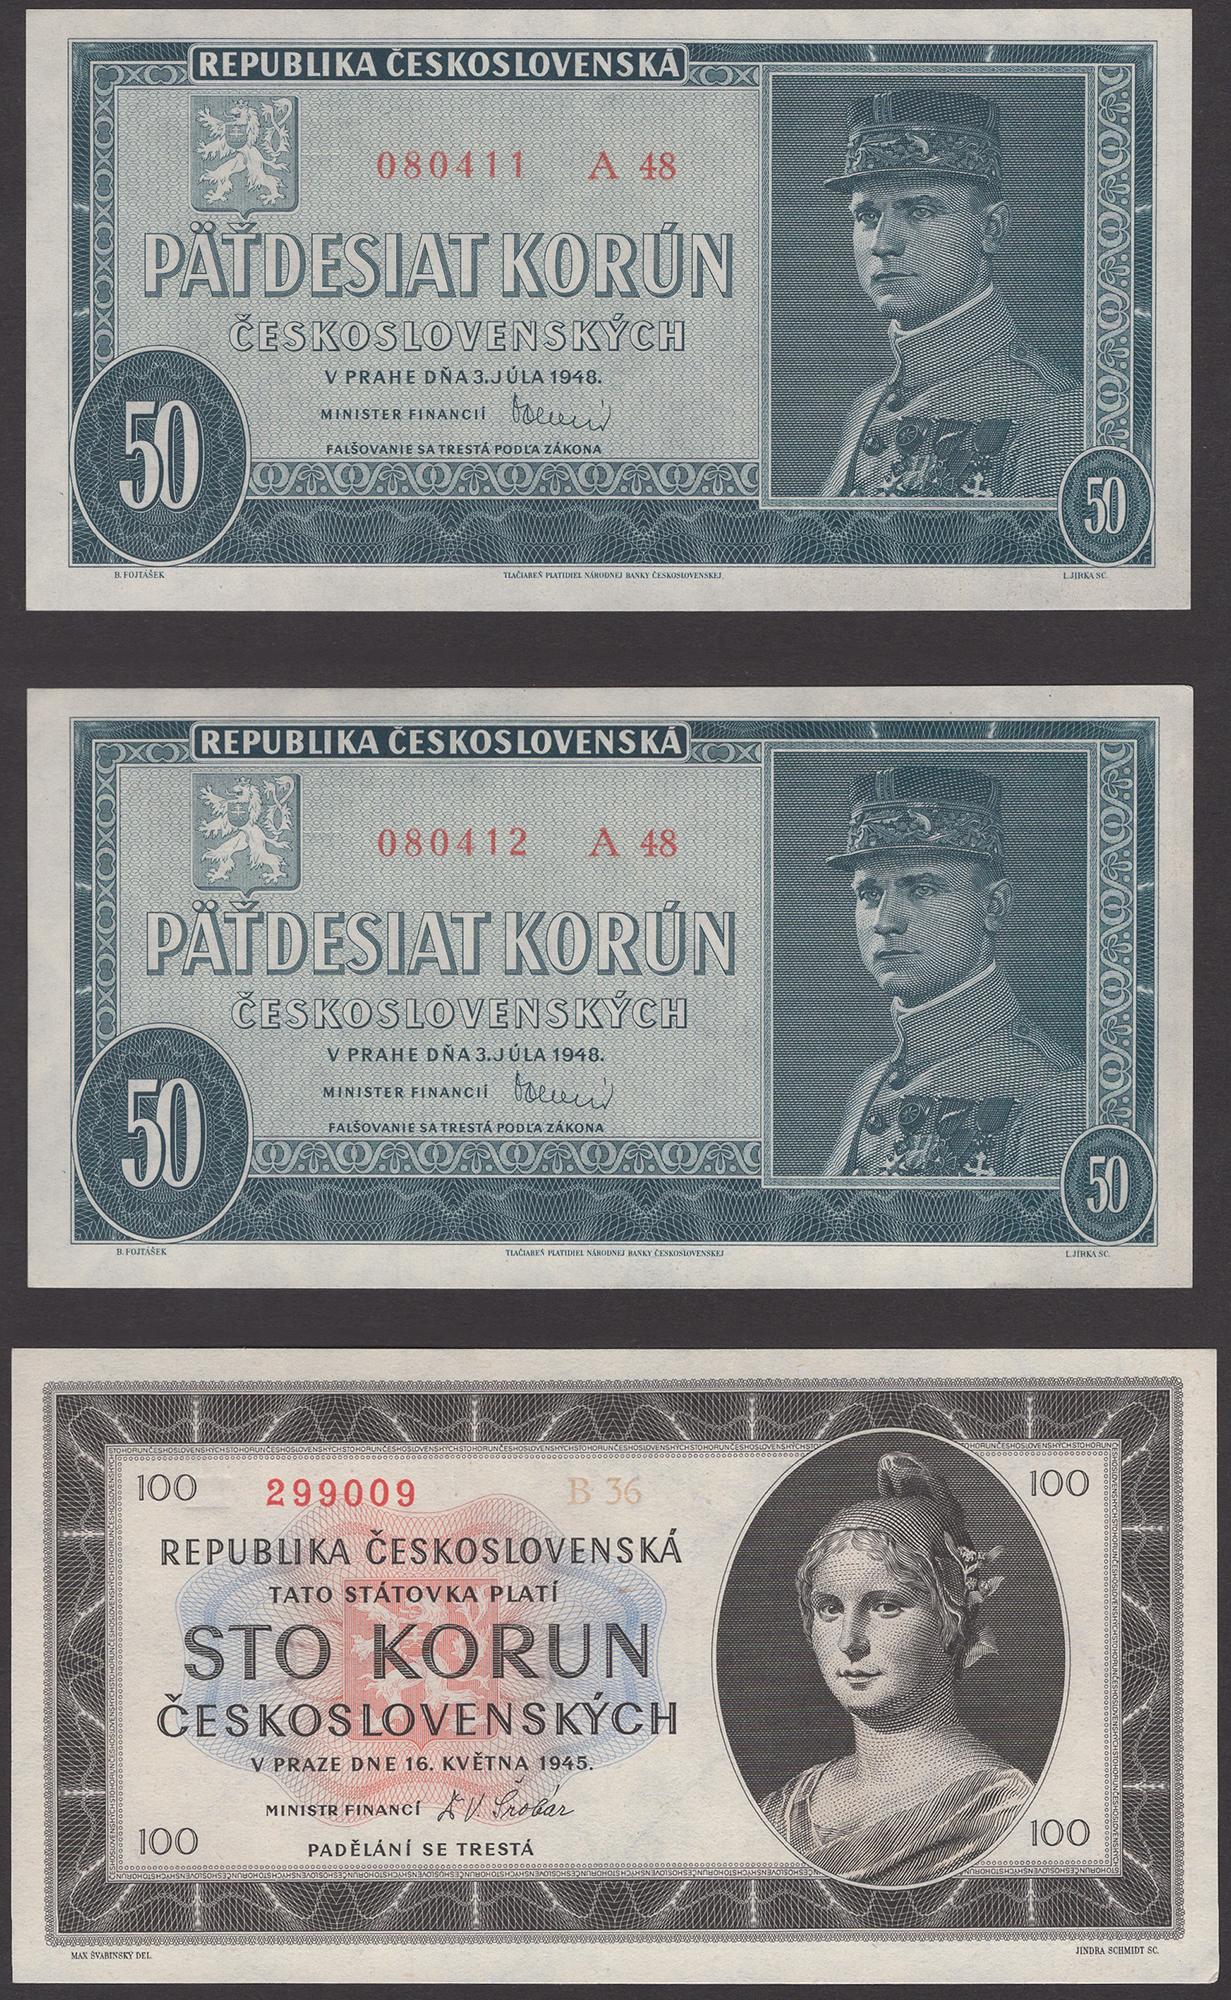 Republika Ceskoslovenska, 50 Korun (2), 1948, serial numbers A48 080411-12, also 100 Korun...